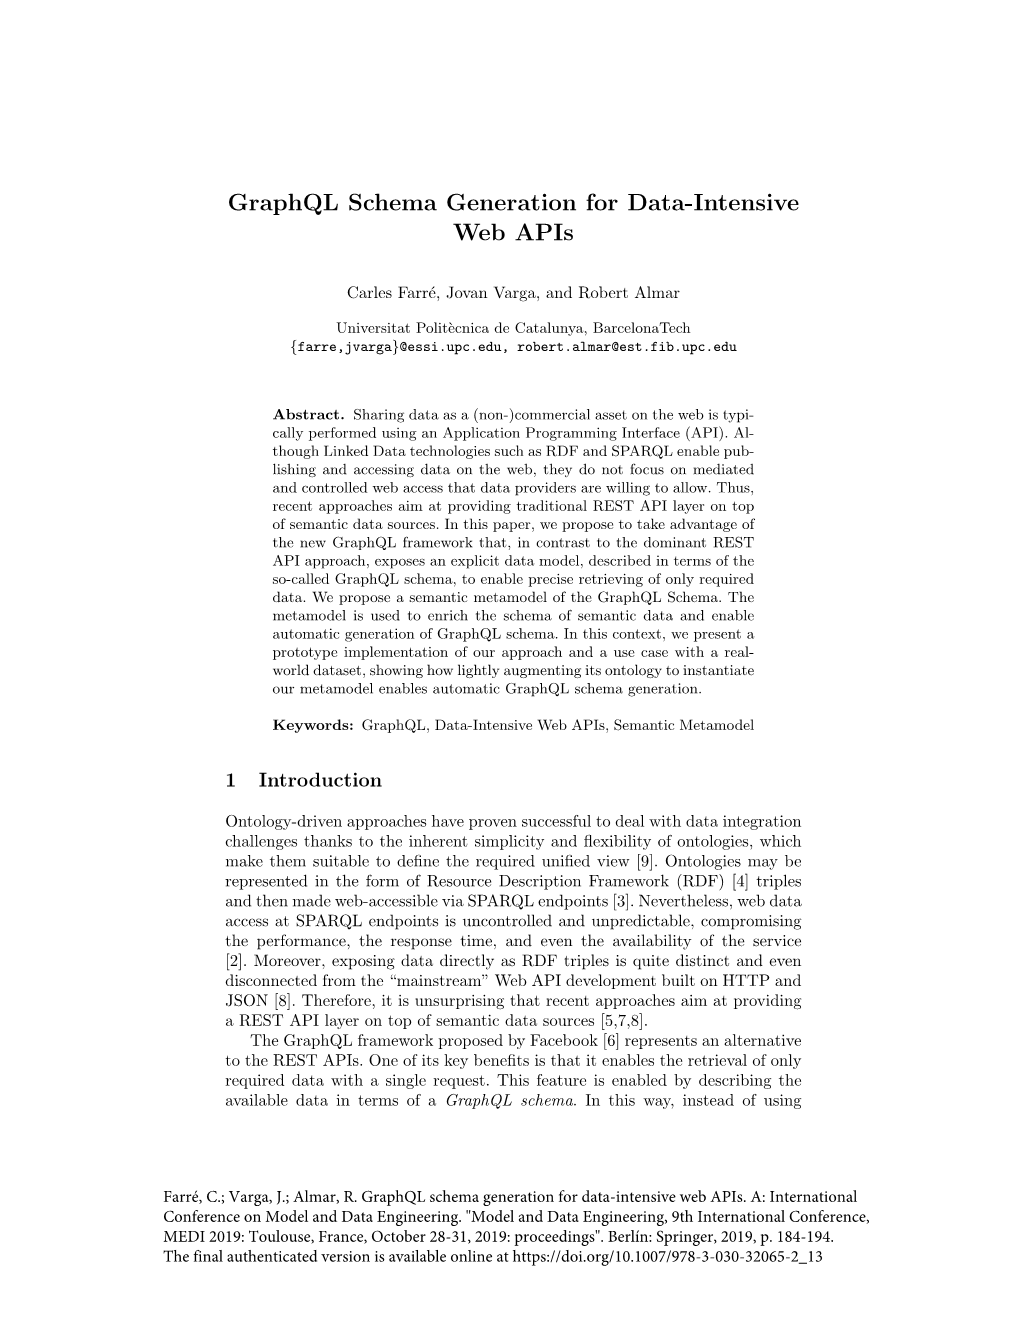 Graphql Schema Generation for Data-Intensive Web Apis